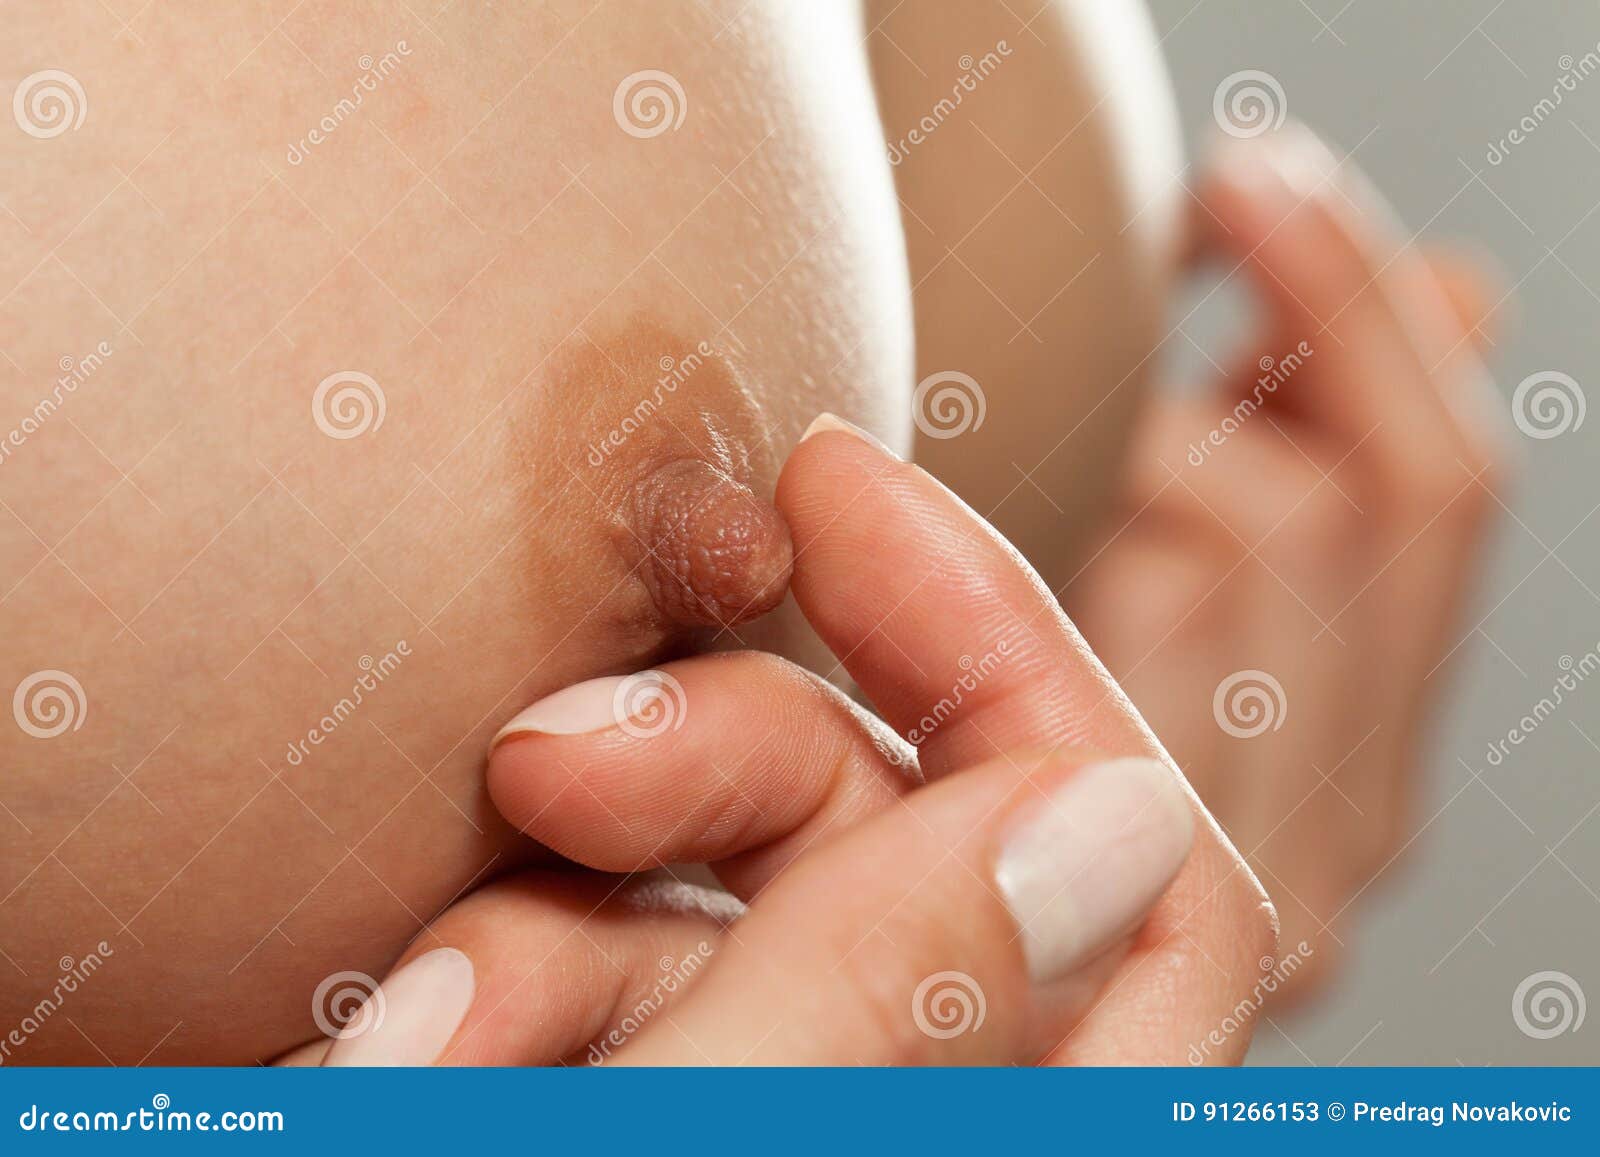 ashley chisum recommends big nipple pic pic